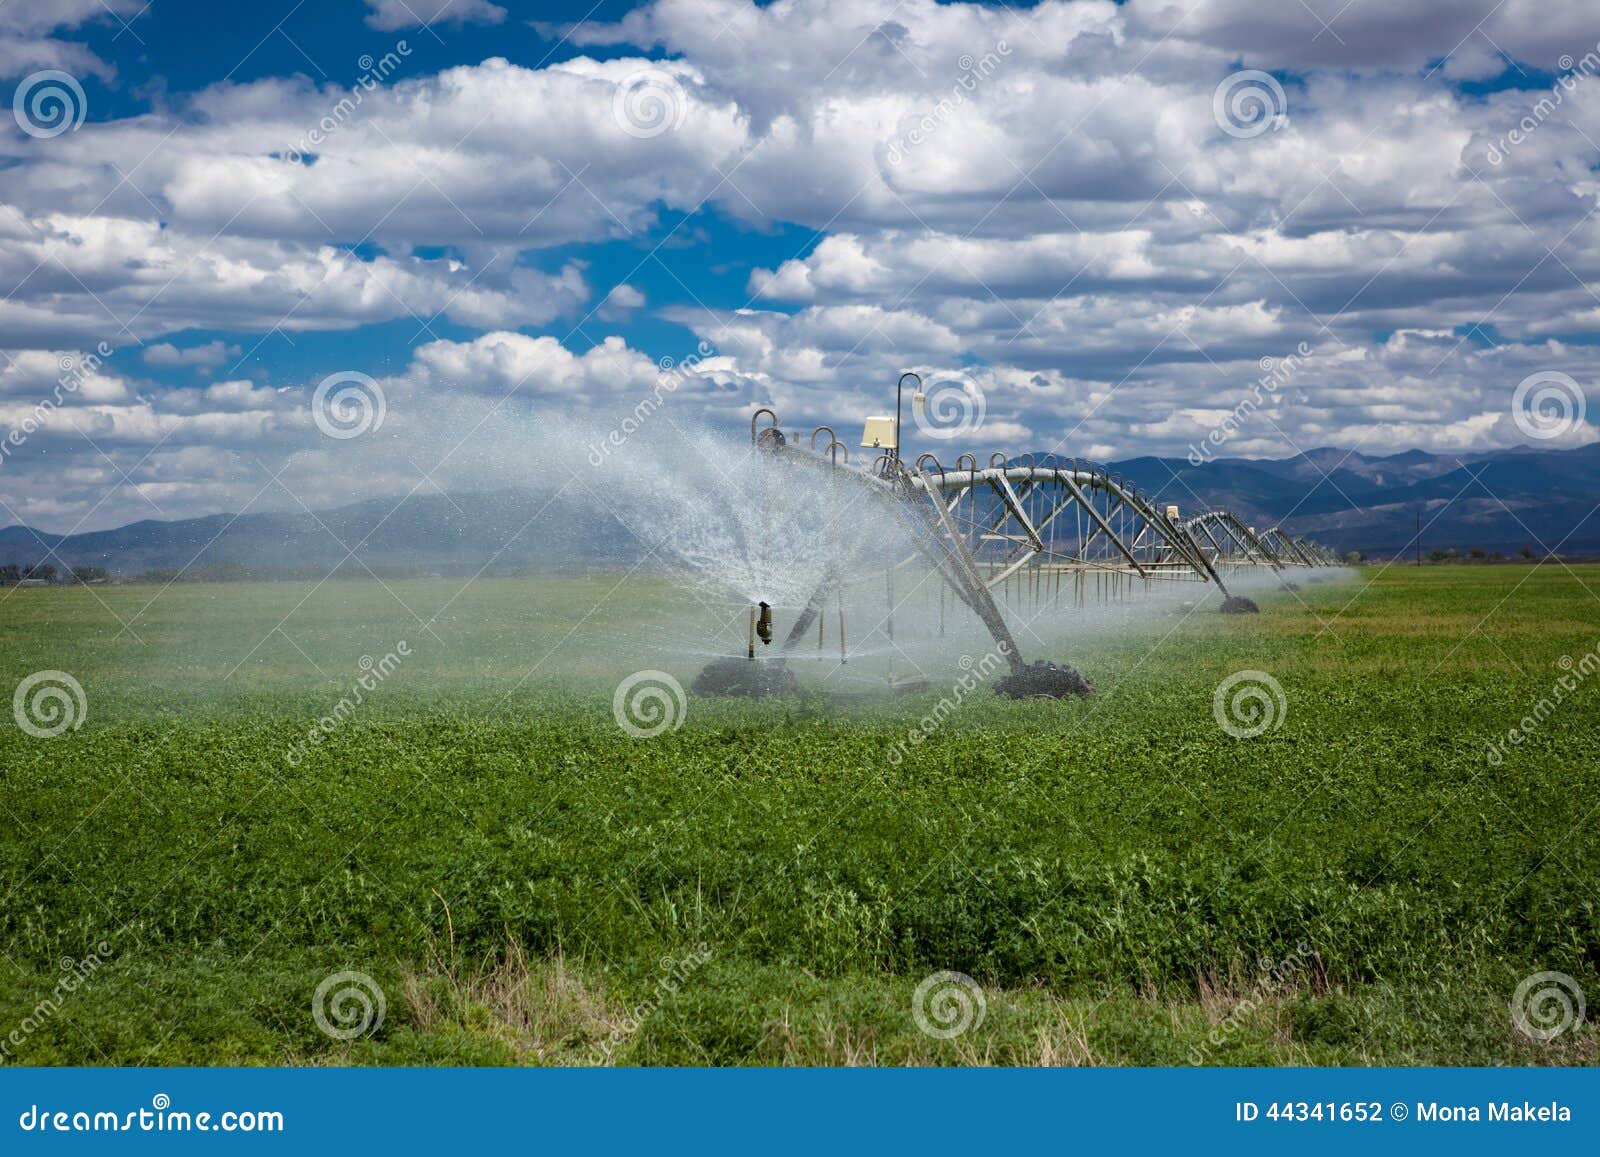 center pivot agricultural irrigation system